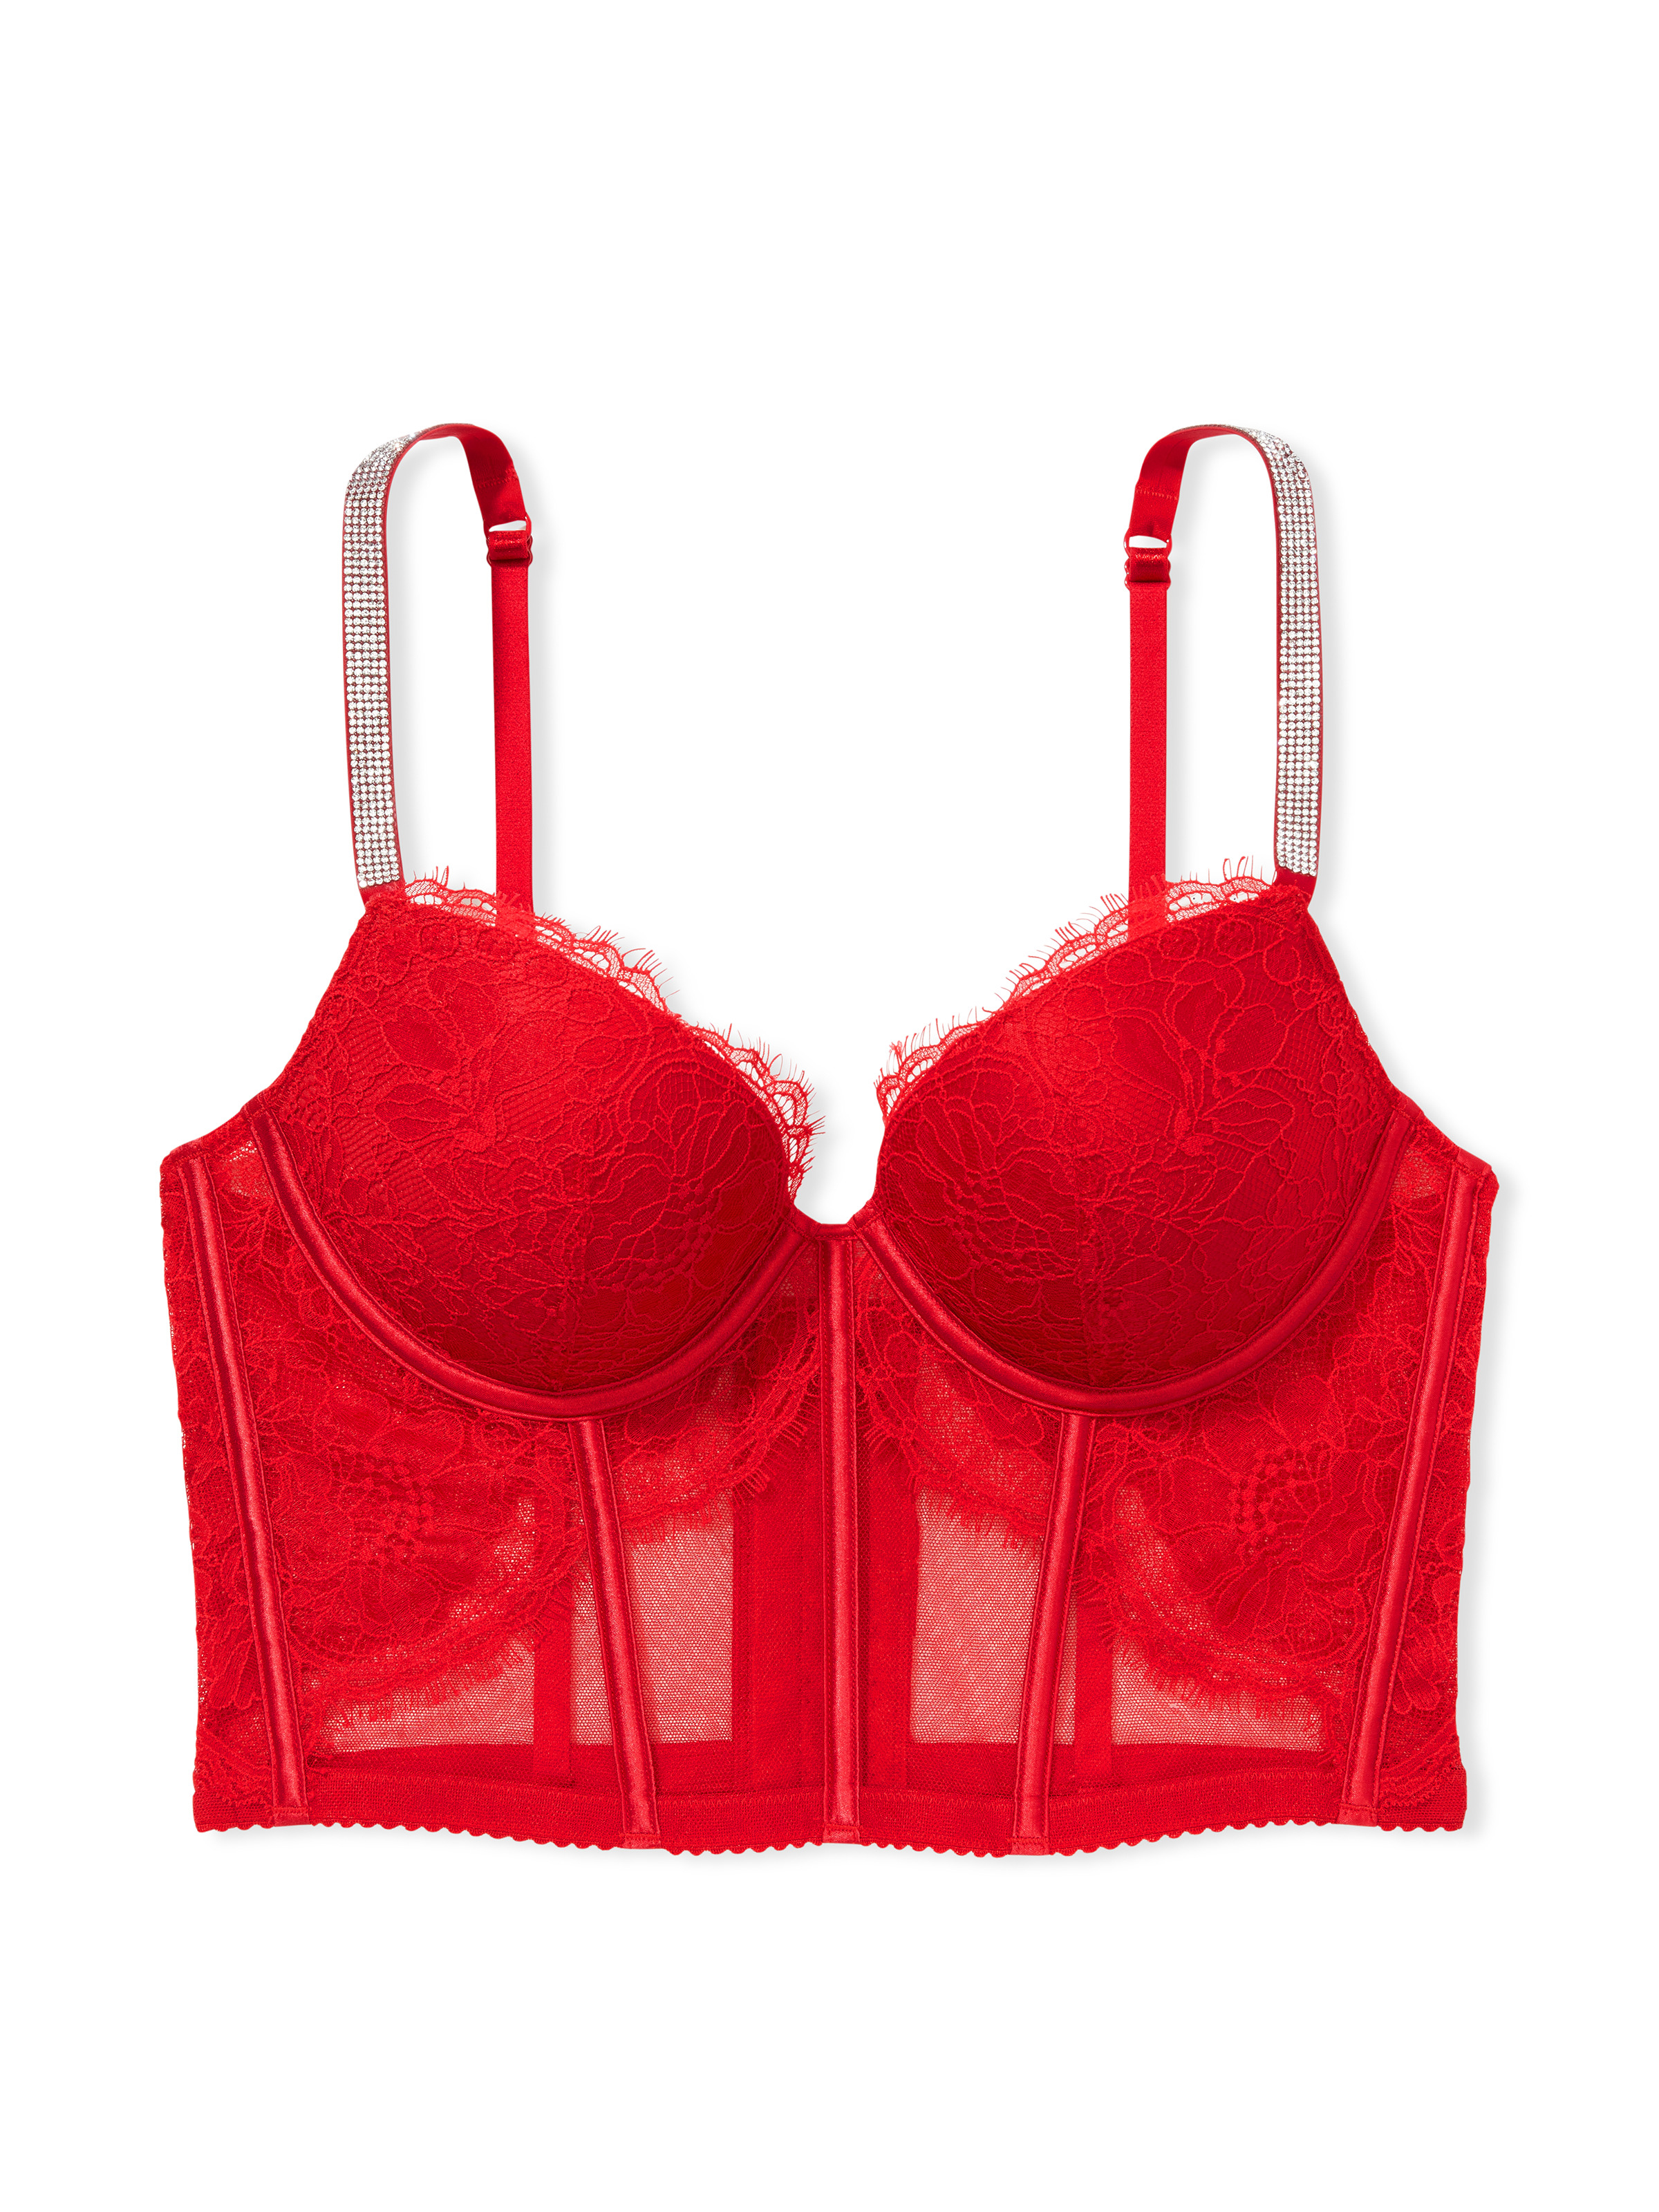 VS VERY SEXY Shine Strap Lace Brazilian Panty XSmall Red Plaid 